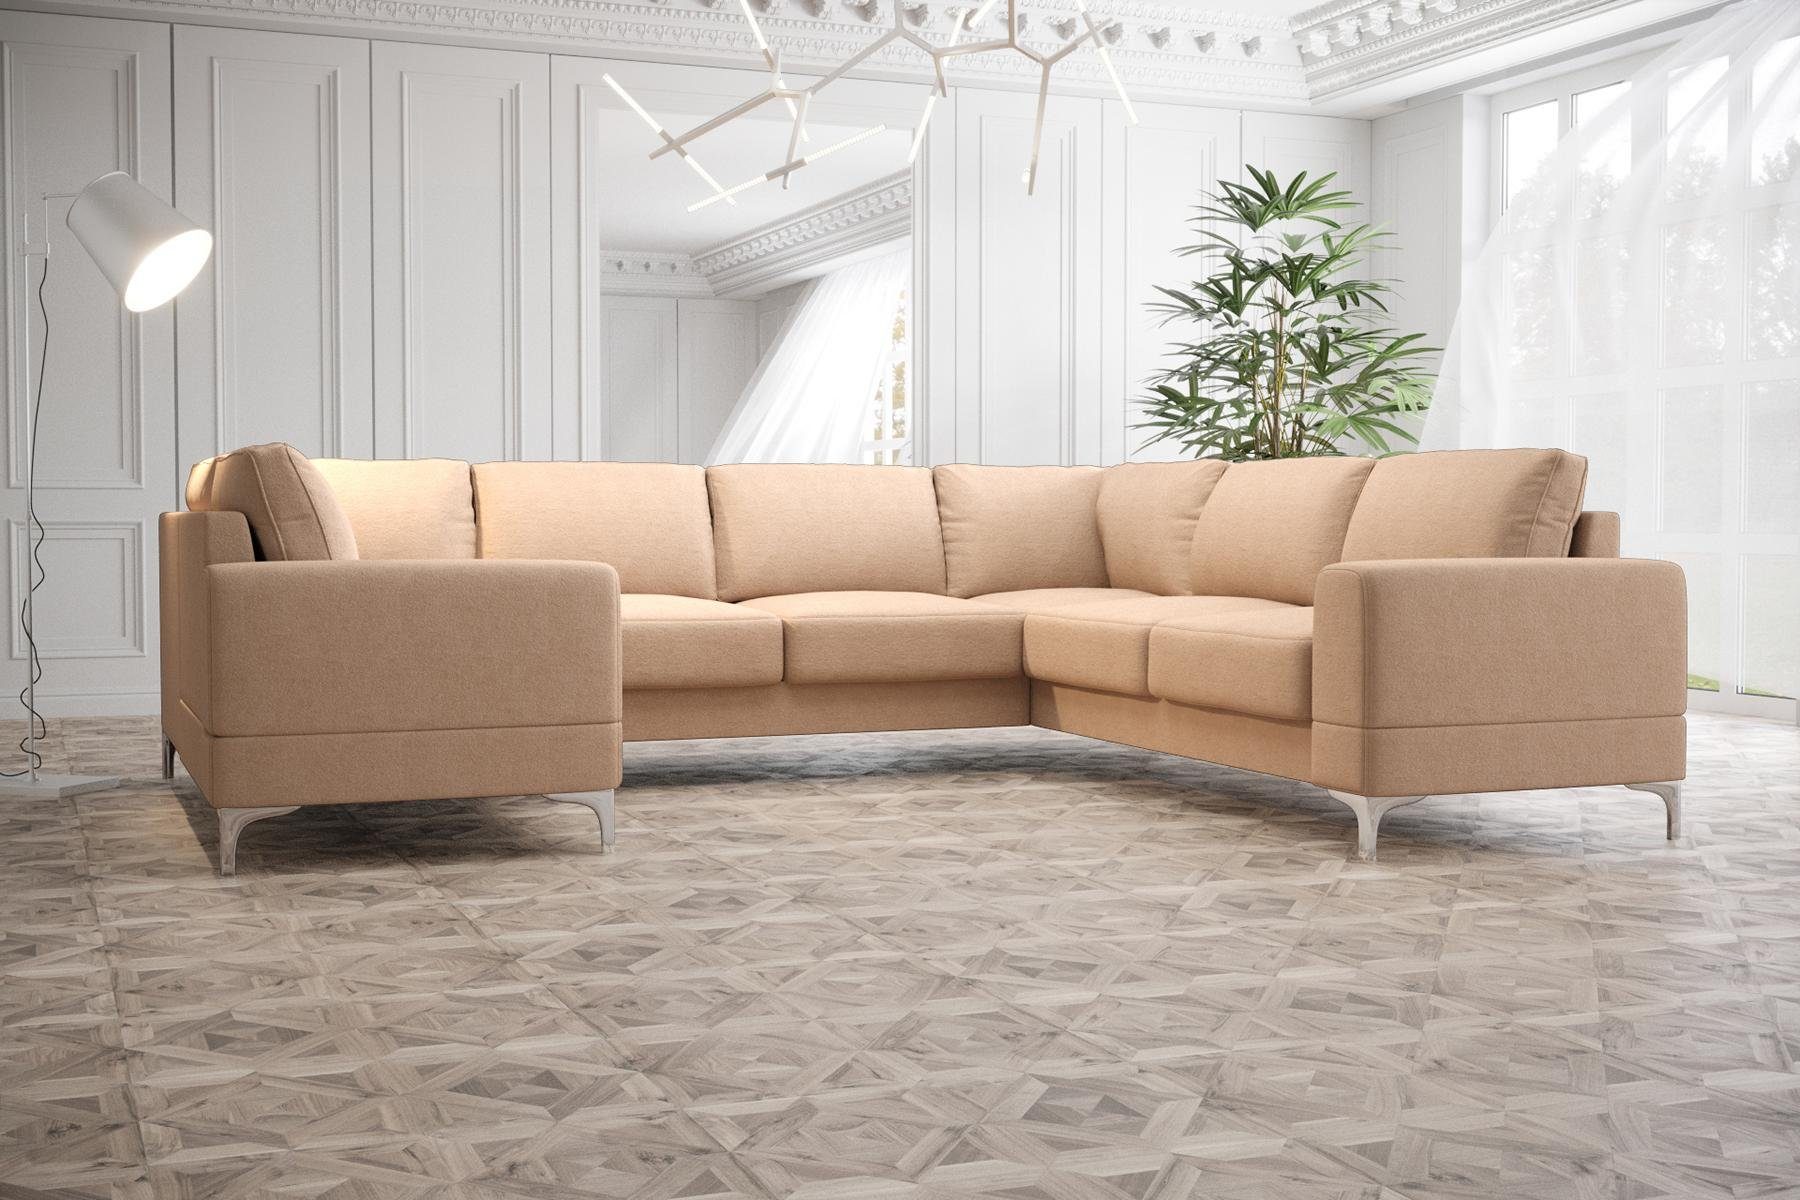 JVmoebel Ecksofa Wohnlandschaft Polsterecke Sofa Couch Sofas Neu, Made in Europe Beige